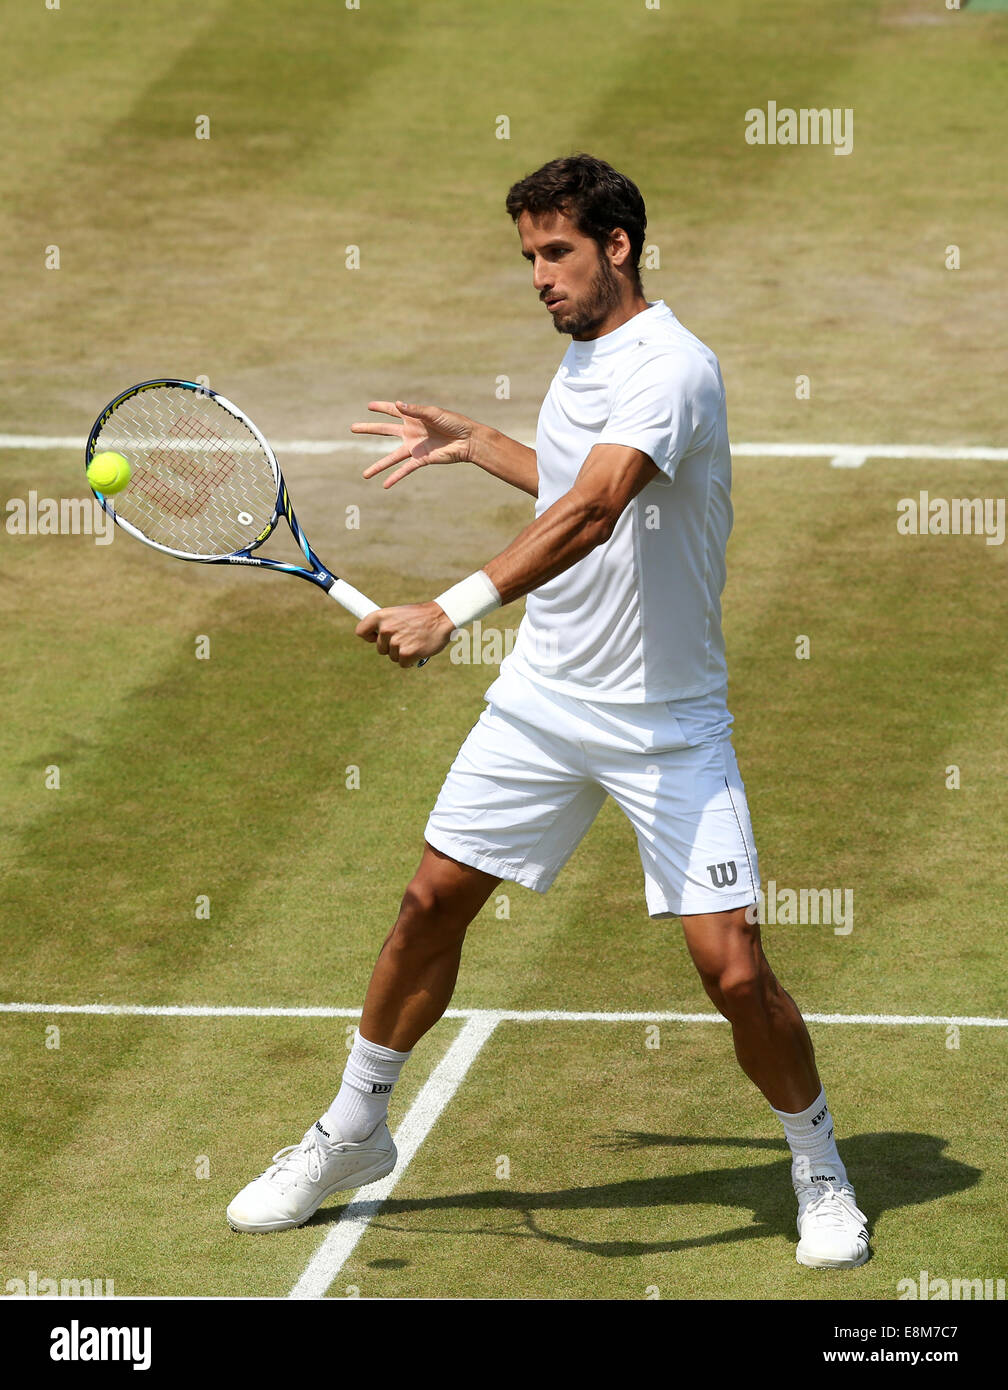 Feliciano Lopez (ESP),Wimbledon Championships 2014, London,England. Stock Photo